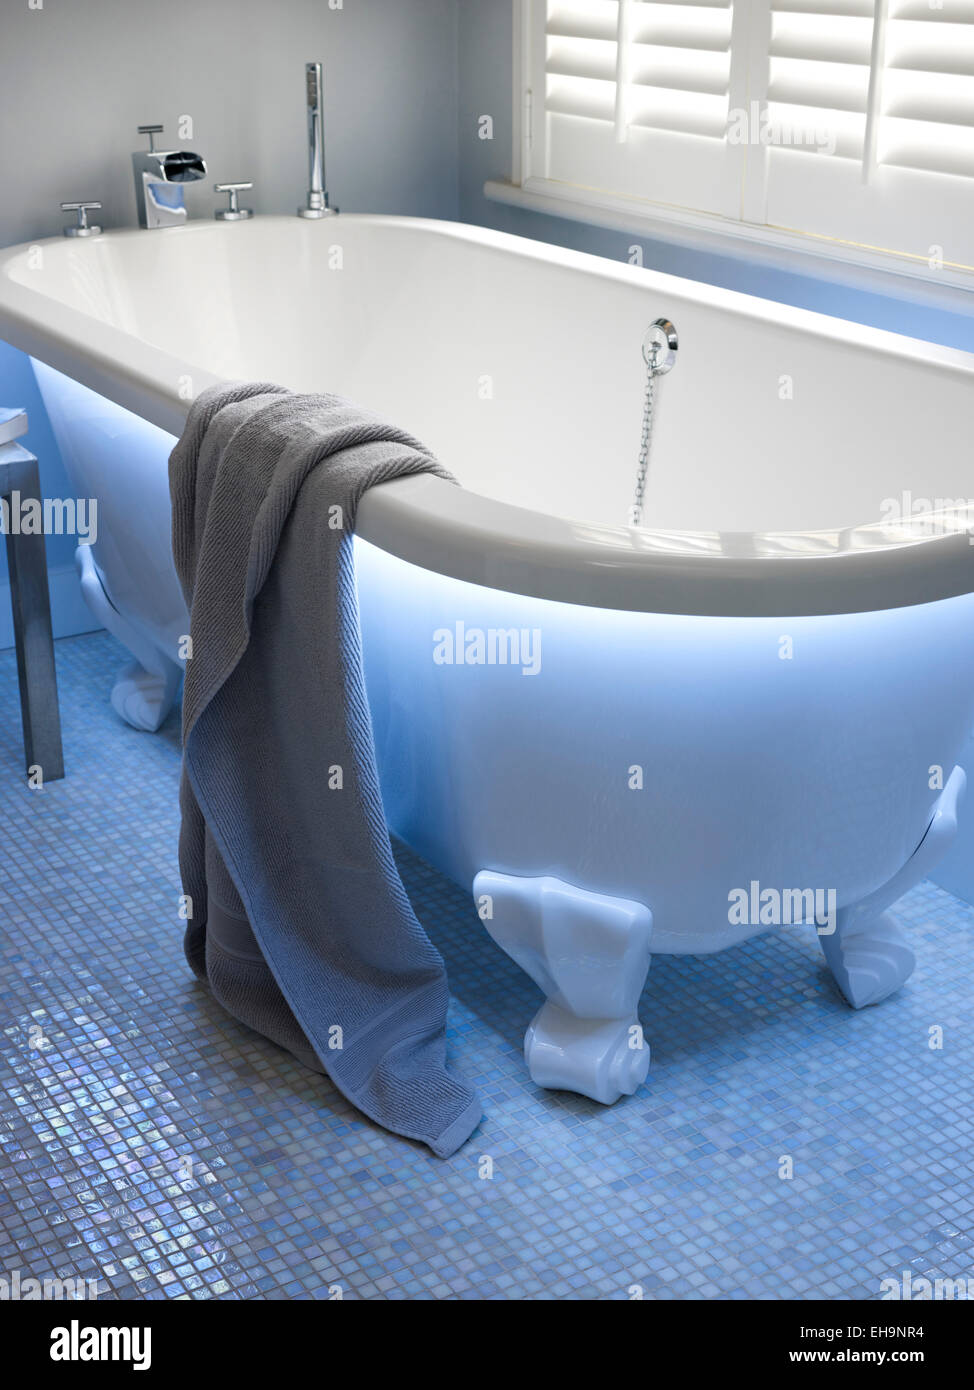 https://c8.alamy.com/comp/EH9NR4/modern-blue-lit-bath-tub-with-ceramic-bath-feet-and-mosaic-floor-detail-EH9NR4.jpg